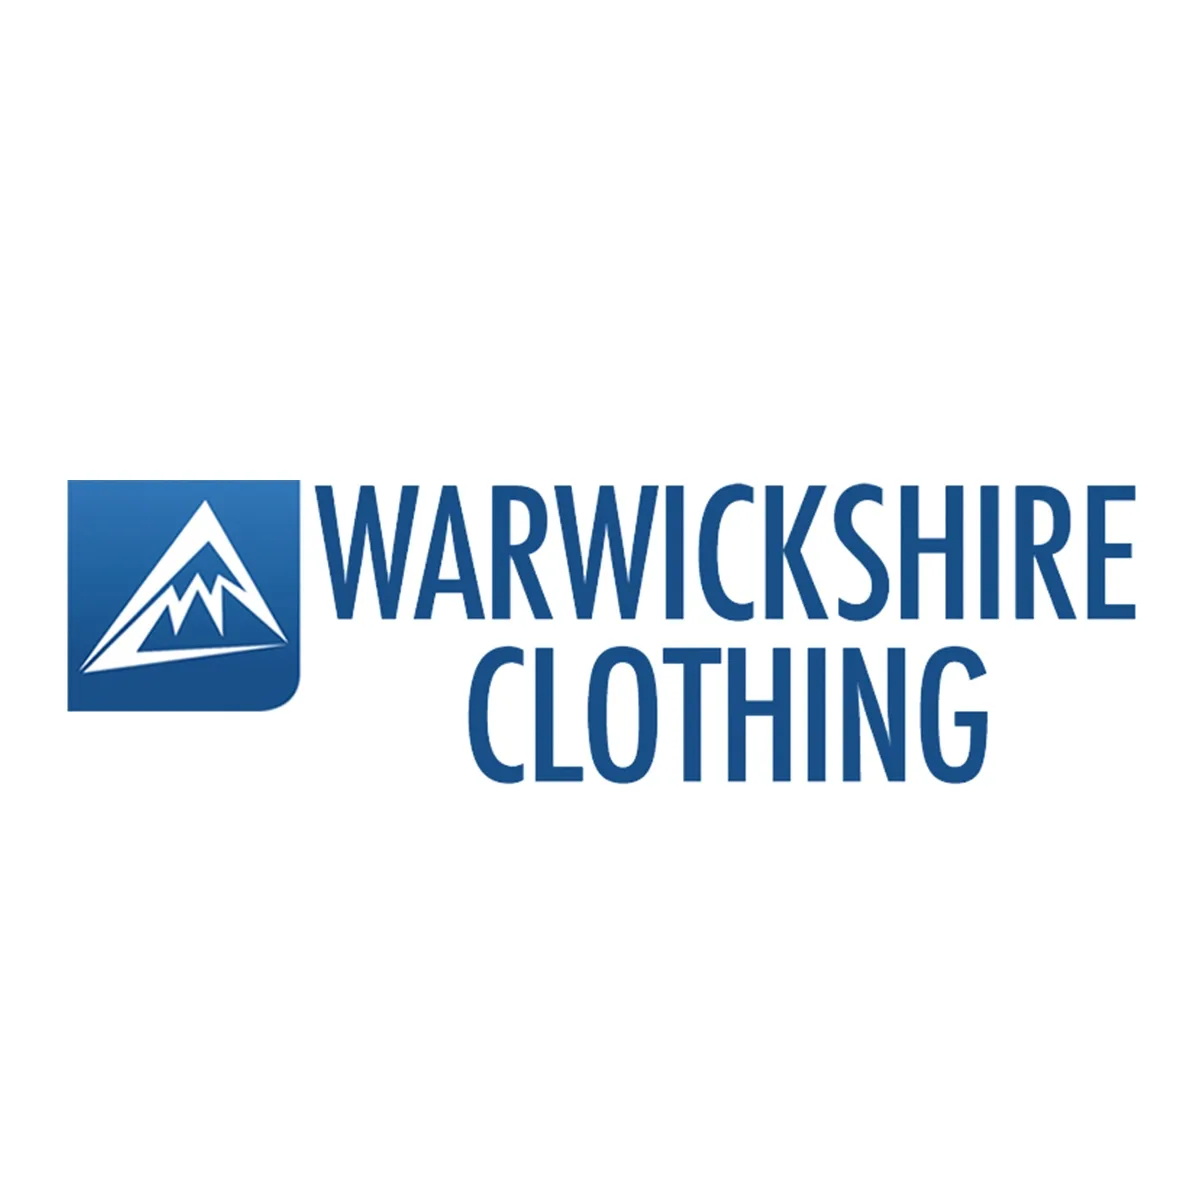  Warwickshire Clothing Promo Code